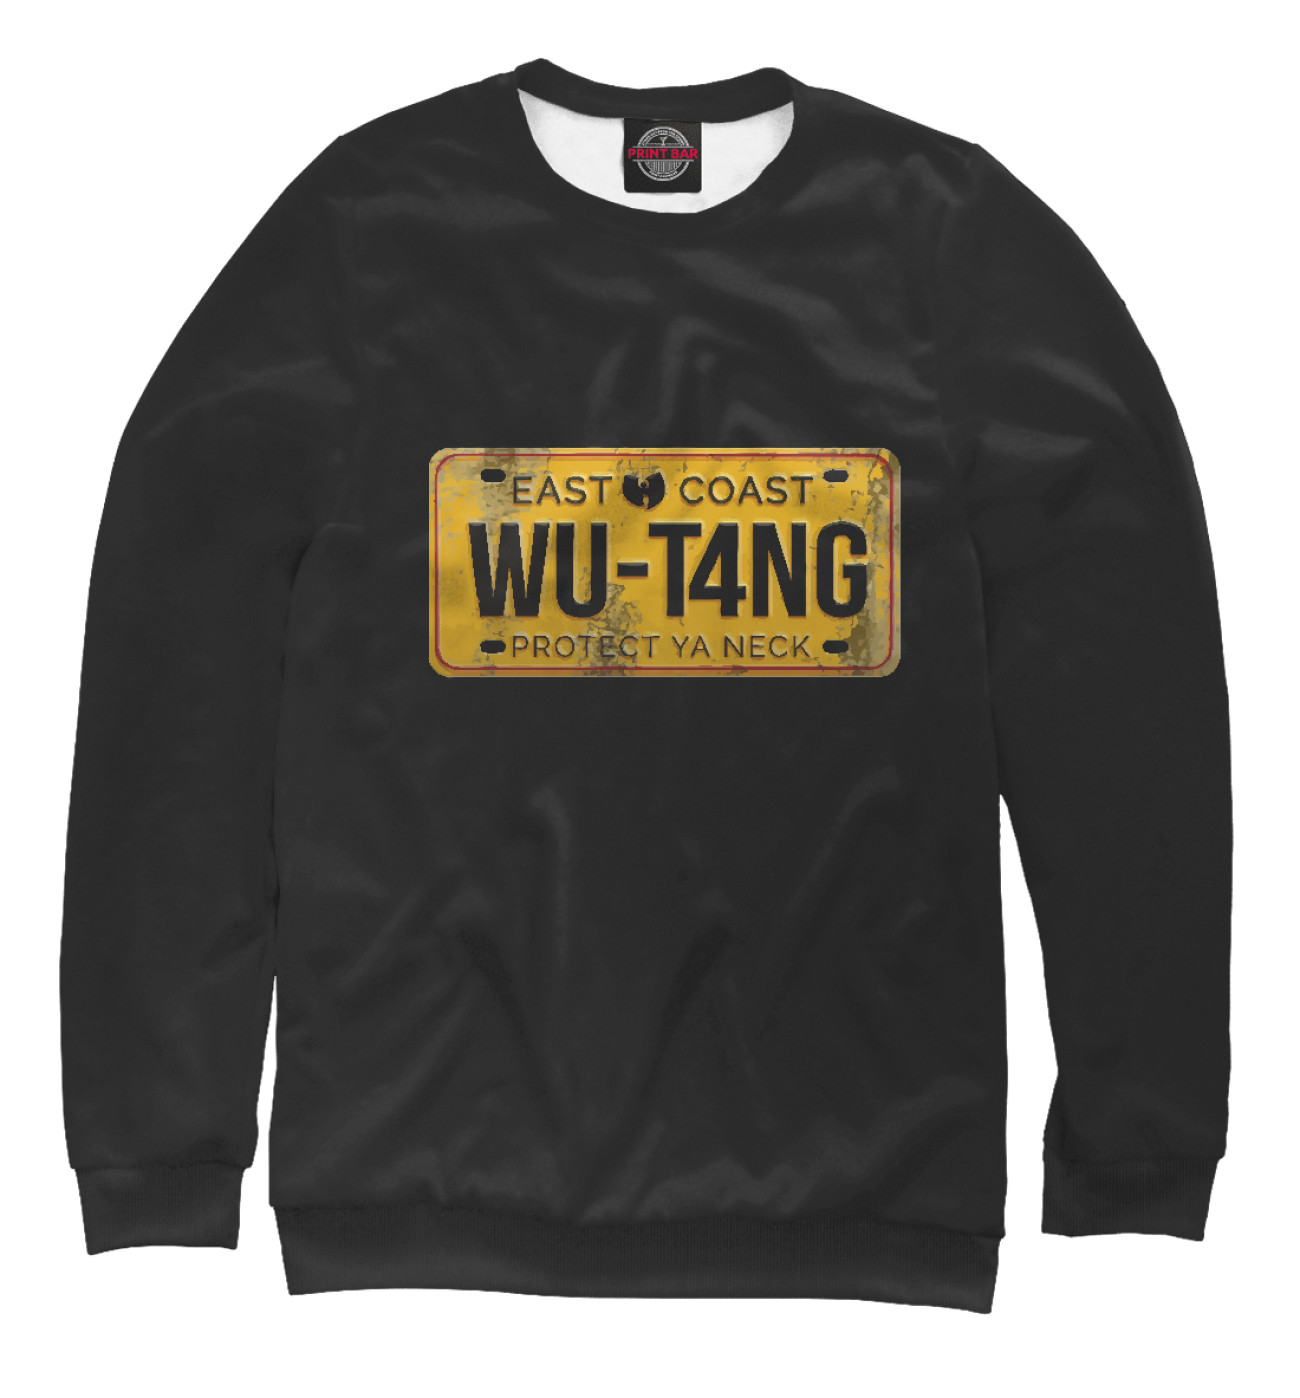 Женский Свитшот Wu-Tang - East Coast, артикул: WTK-344623-swi-1